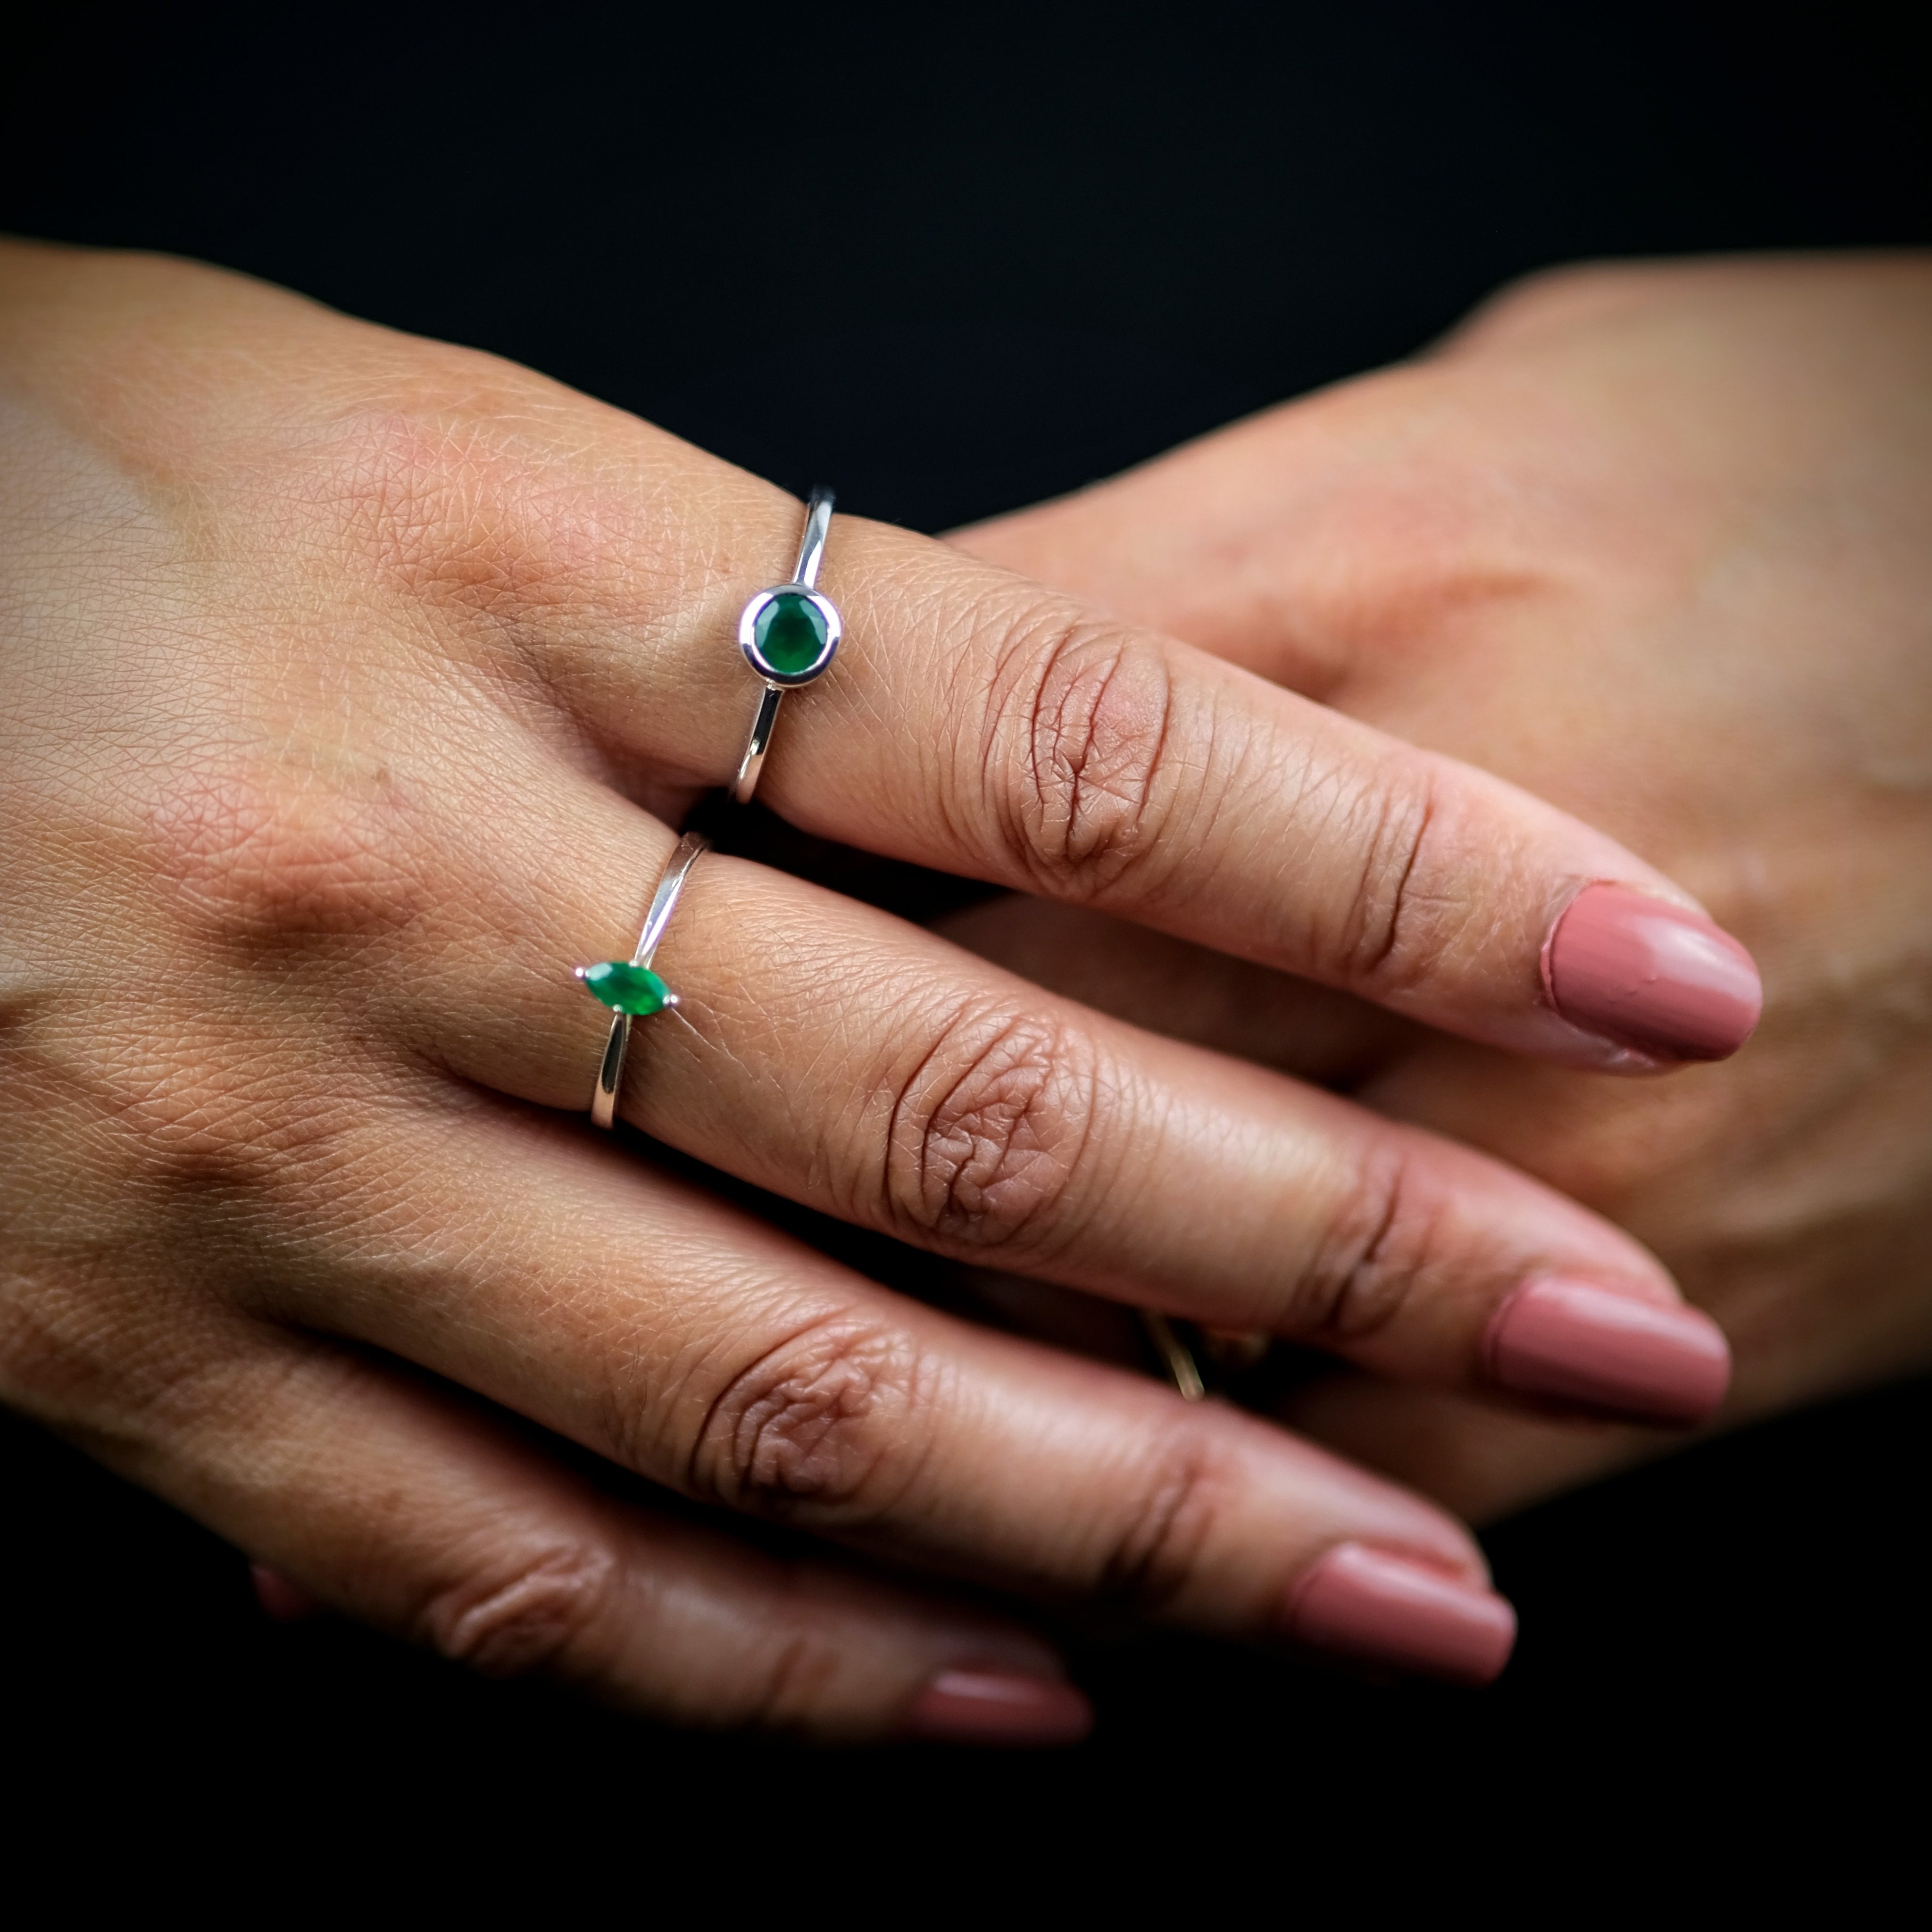 A model wearing two green onyx gemstone rings